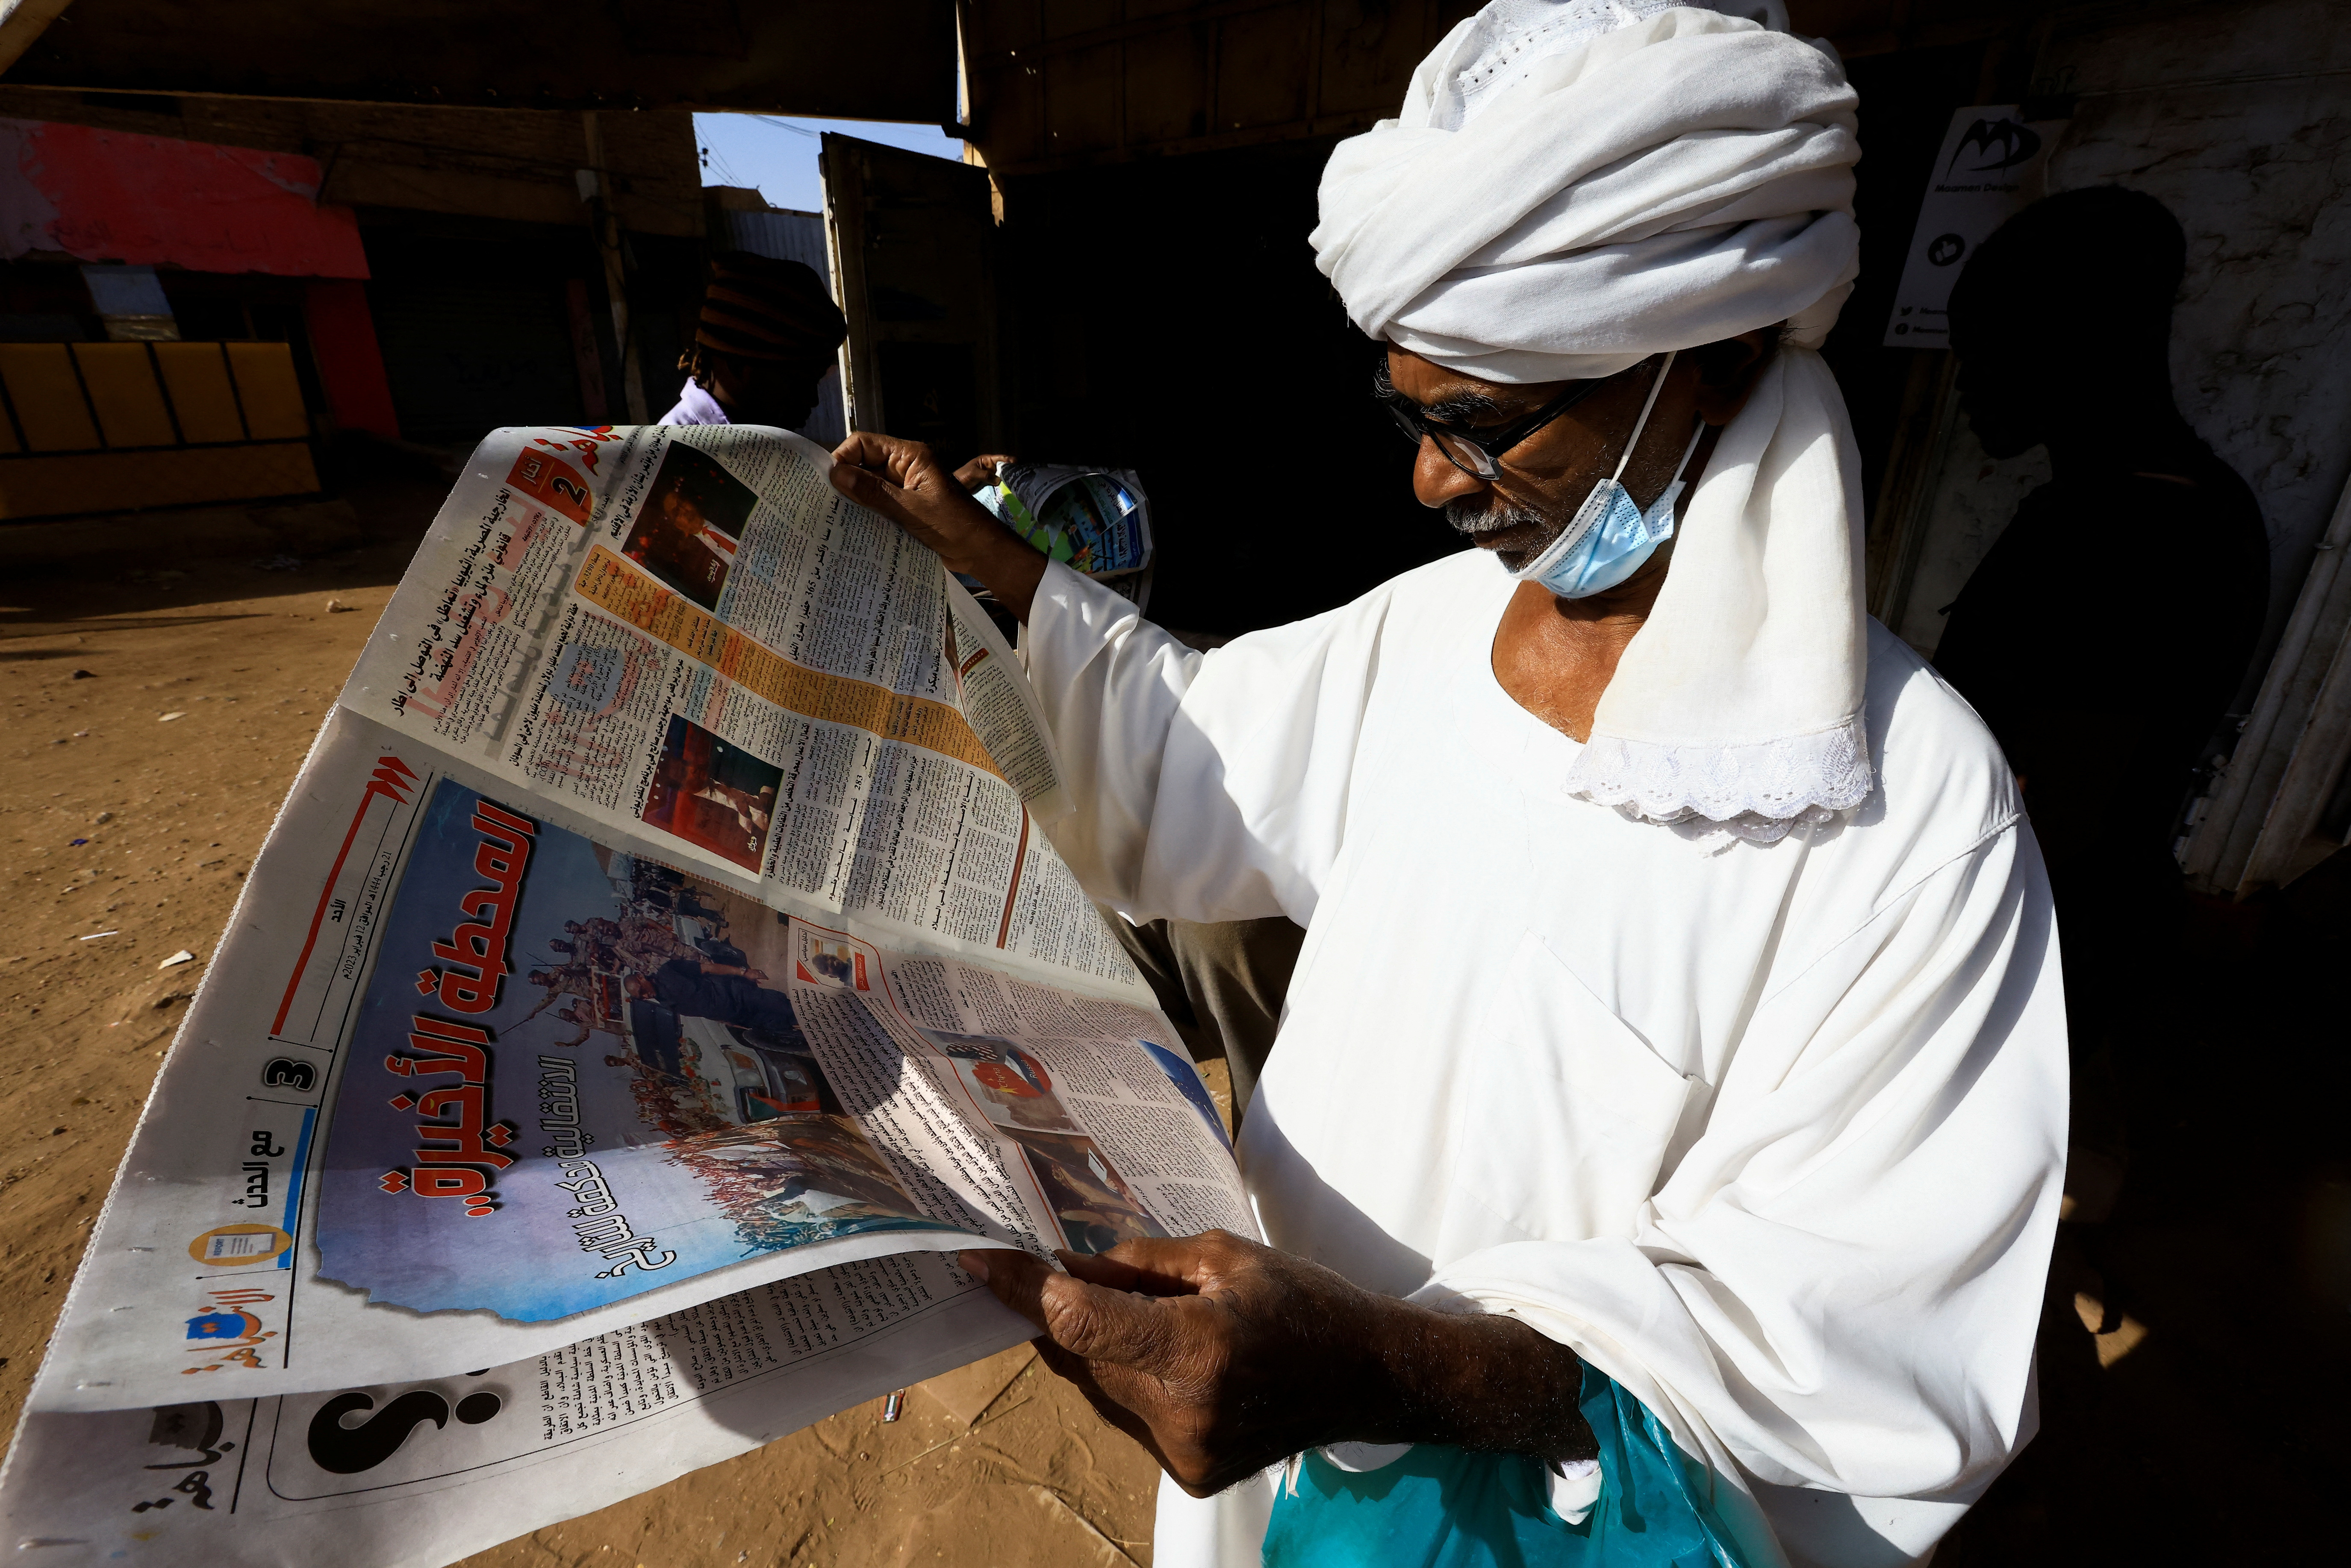 A man reads a newspaper near the Al-Zikriyat library in Omdurma